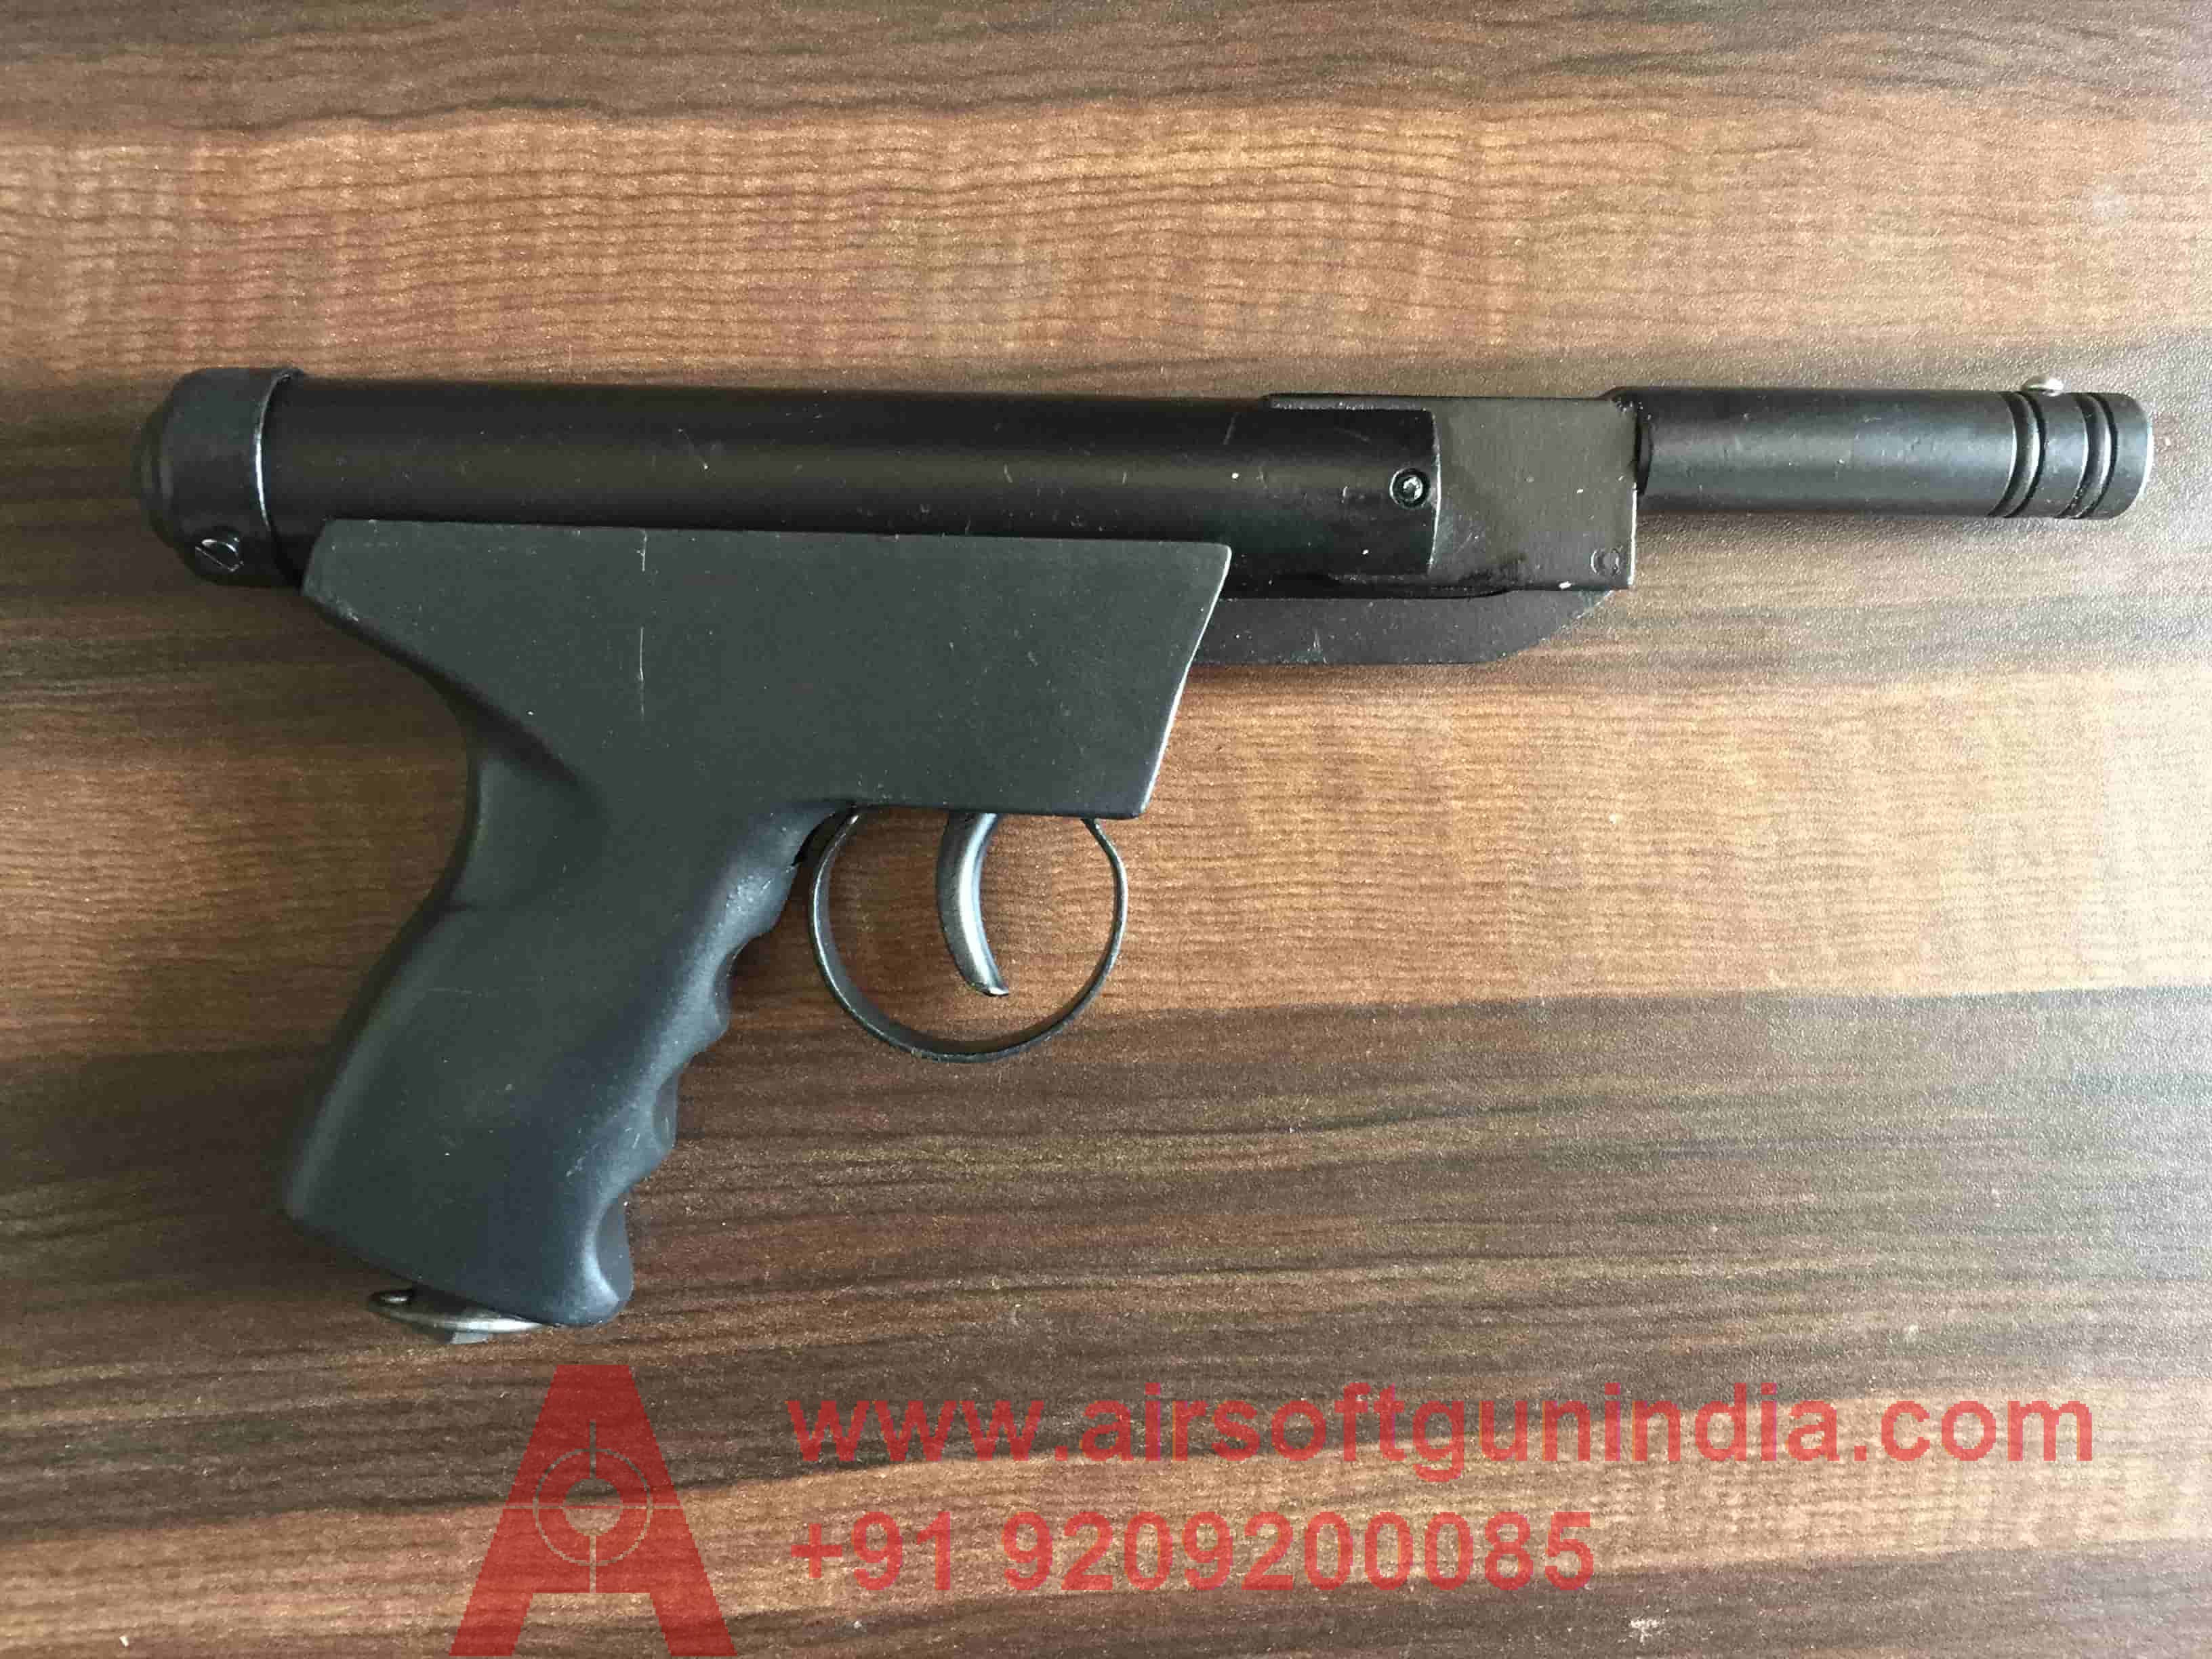 Bond Series-1 Air Pistol For Target Practice Metal Body Black Color